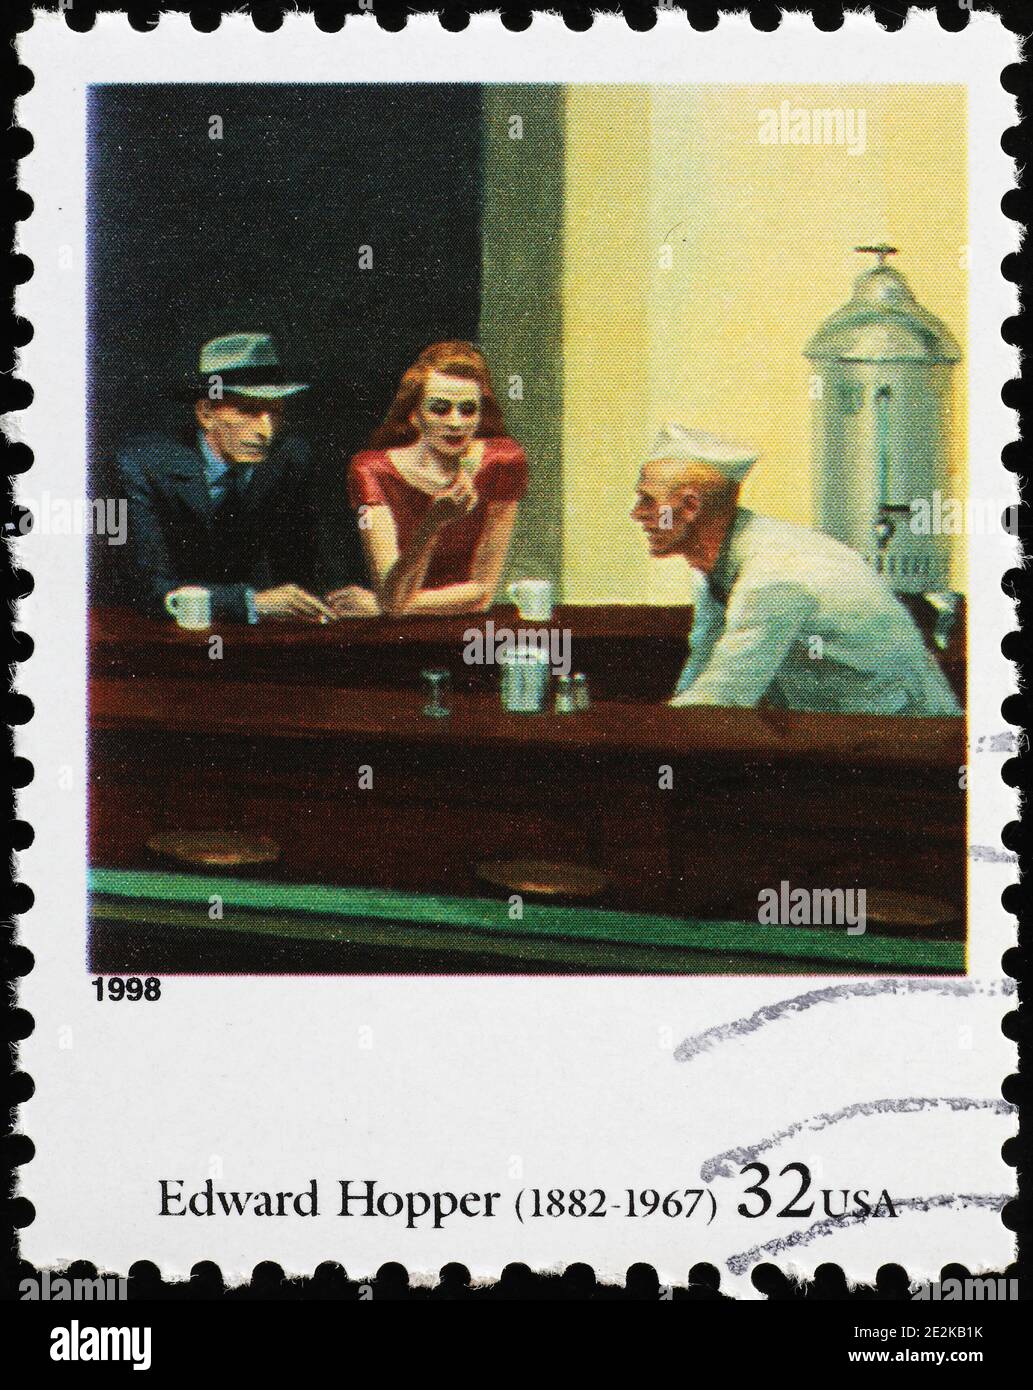 Nighthawks by Edward Hopper on american stamp Stock Photo